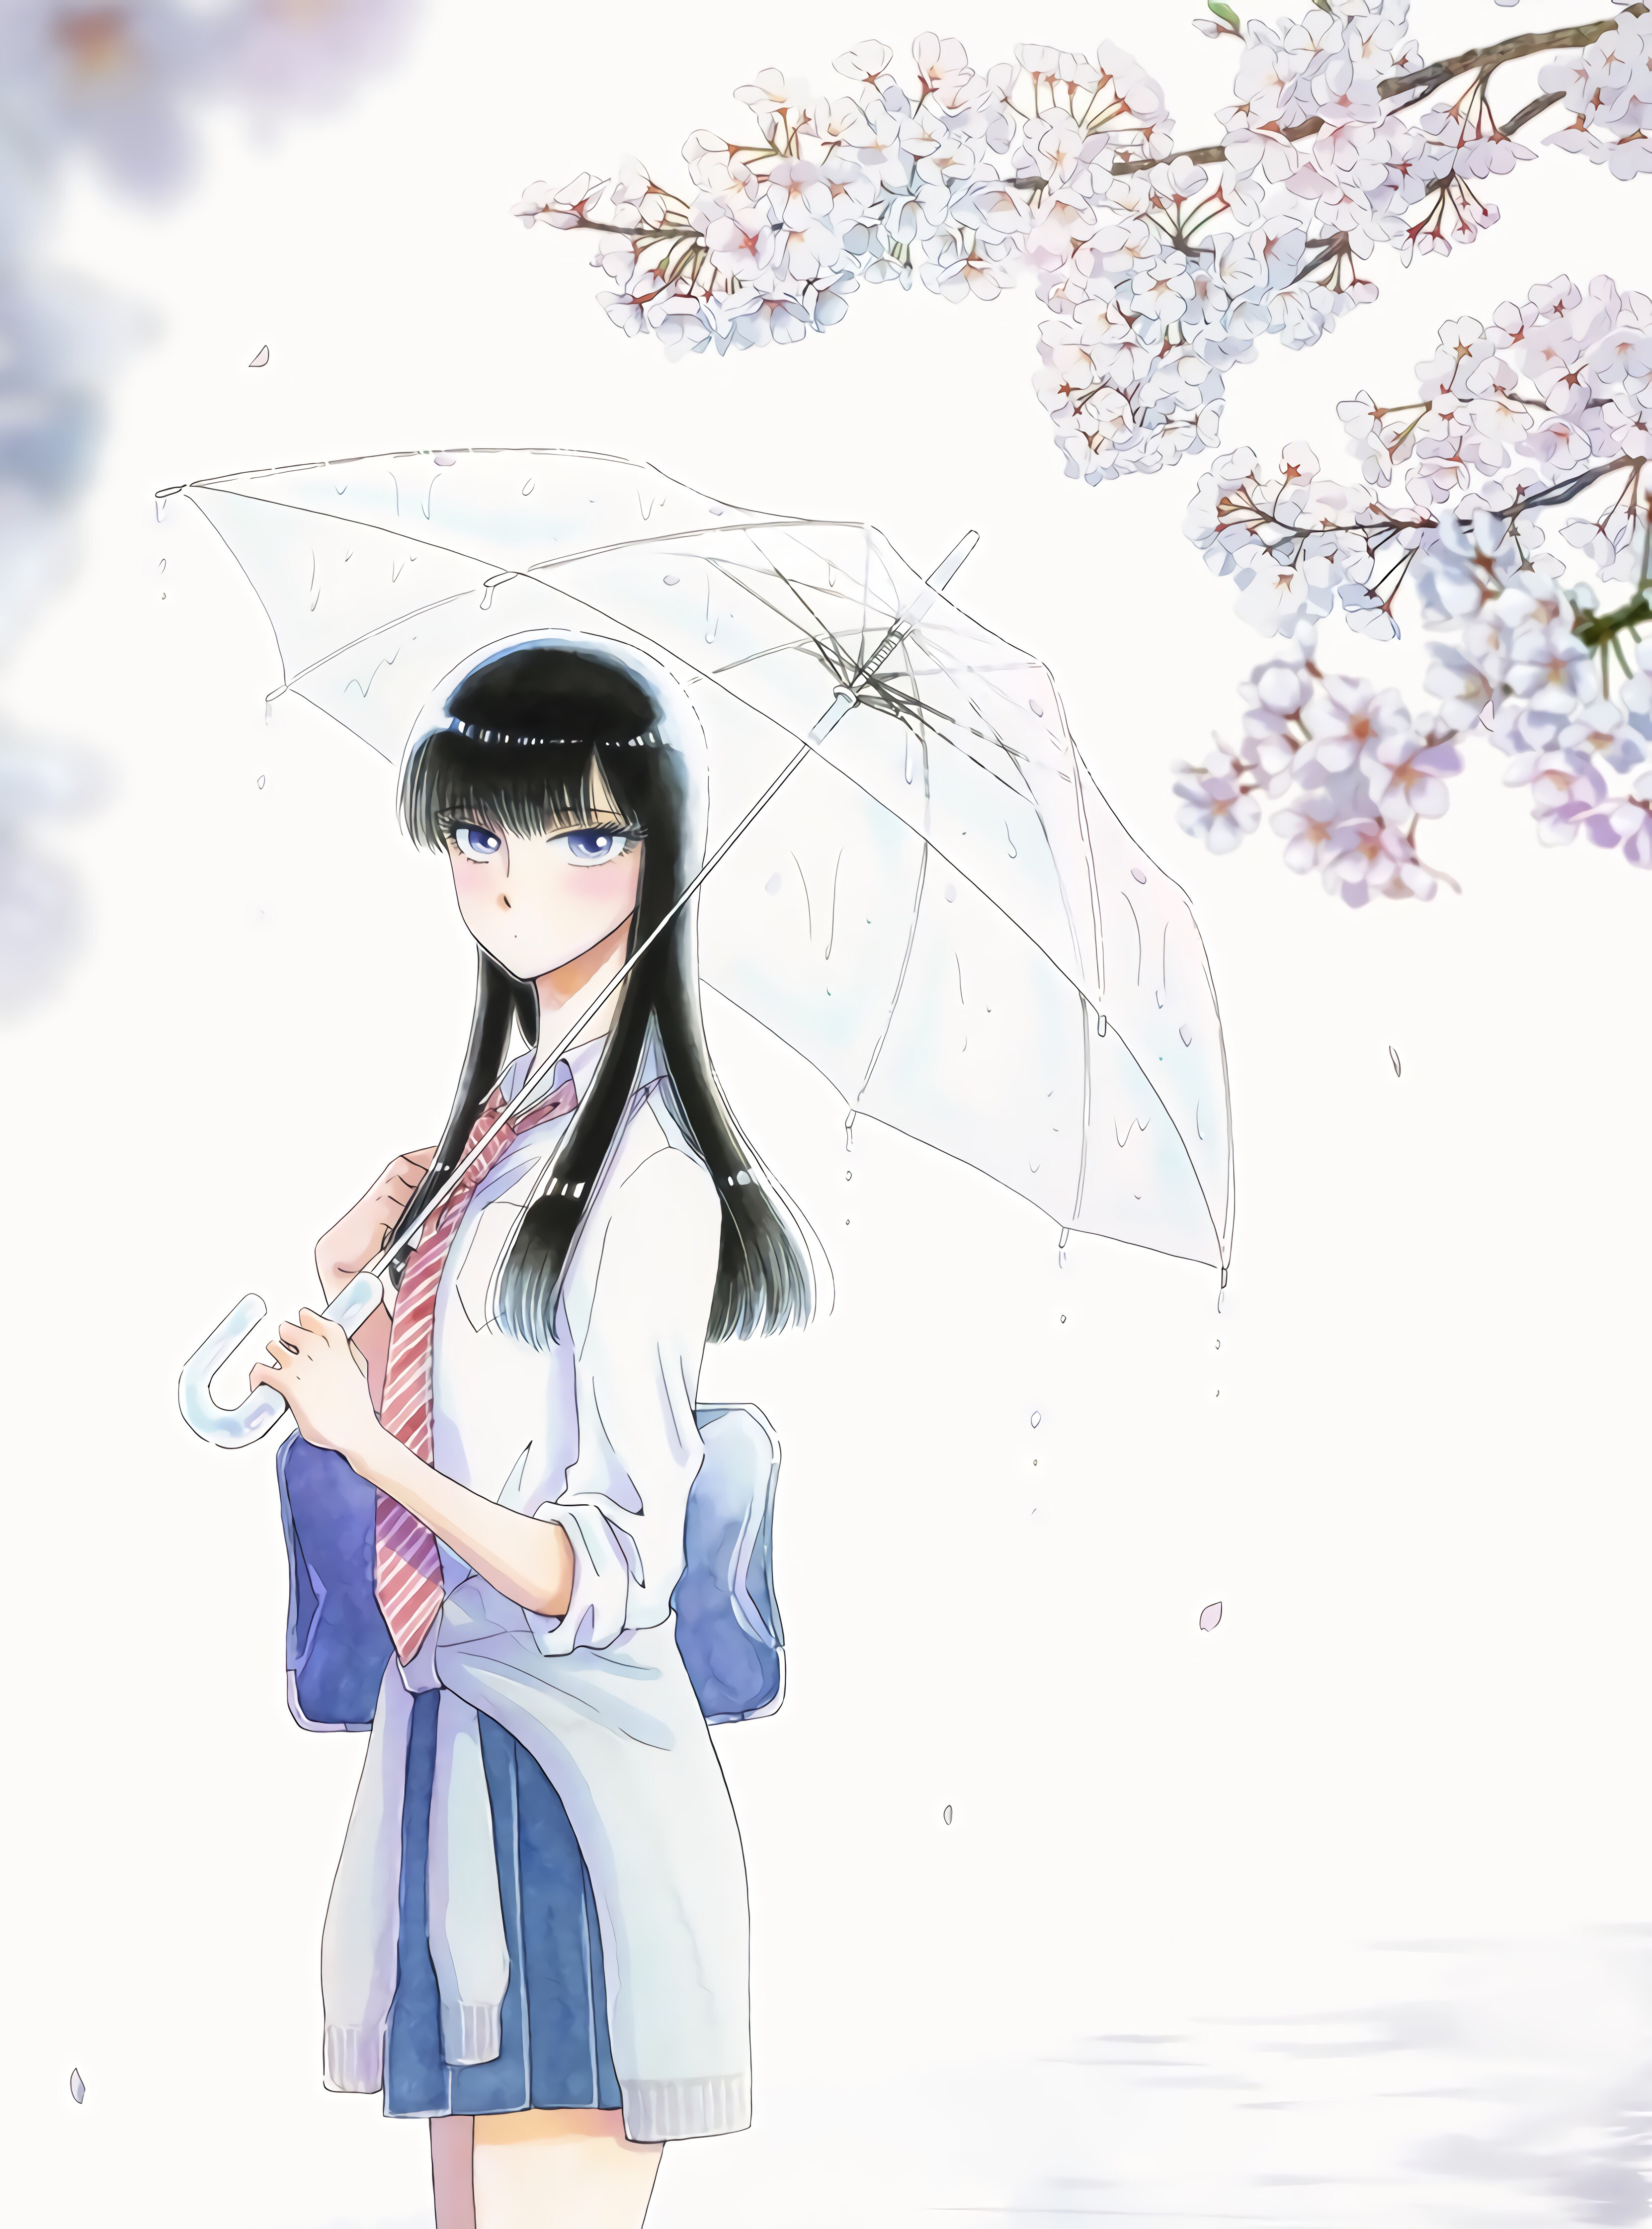 Anime After the Rain Art